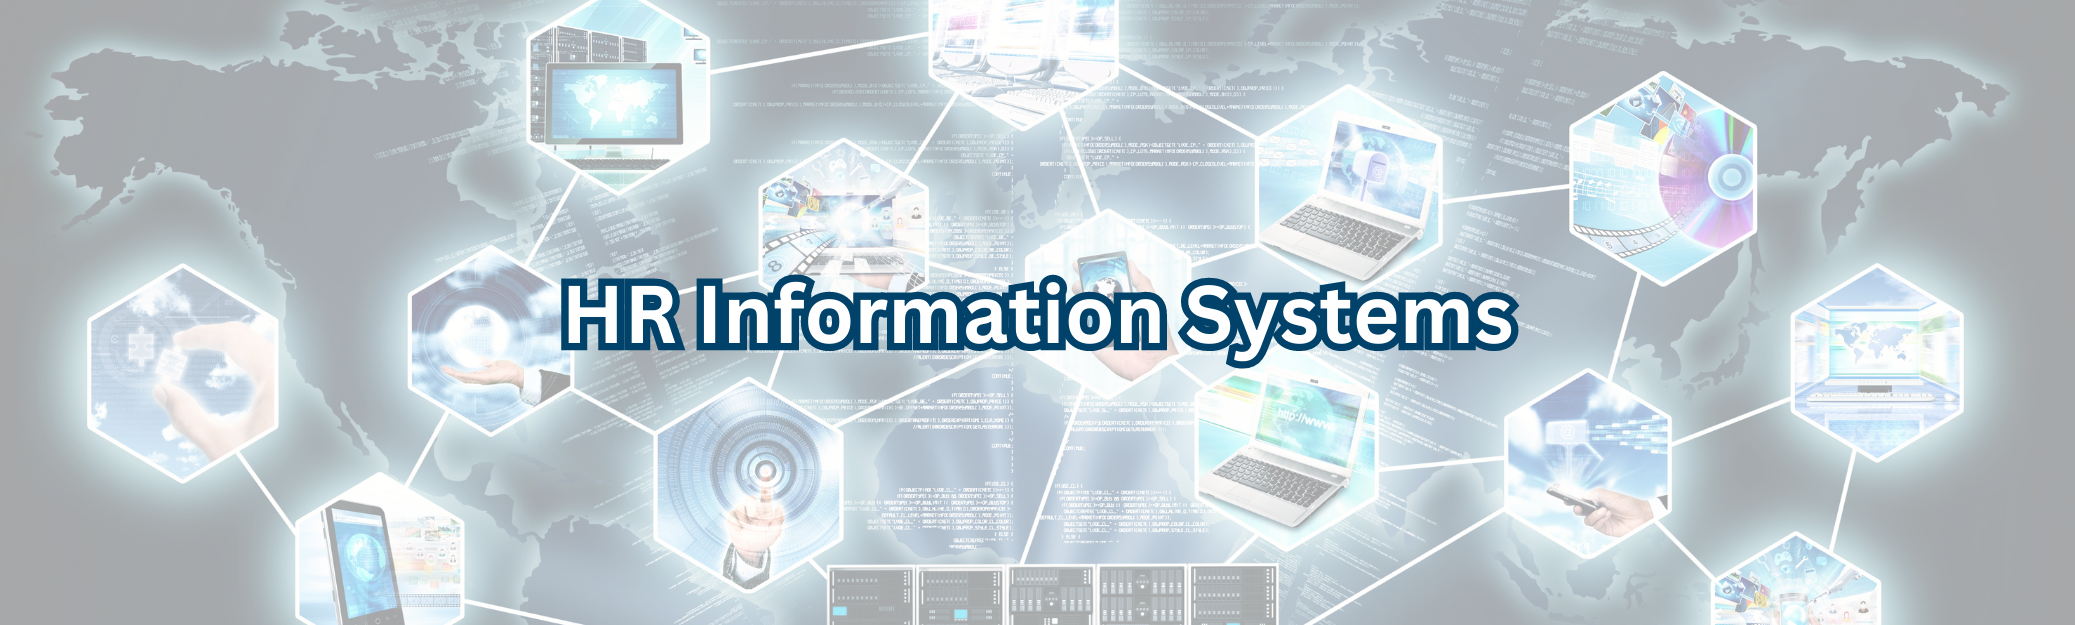 HR information systems banner